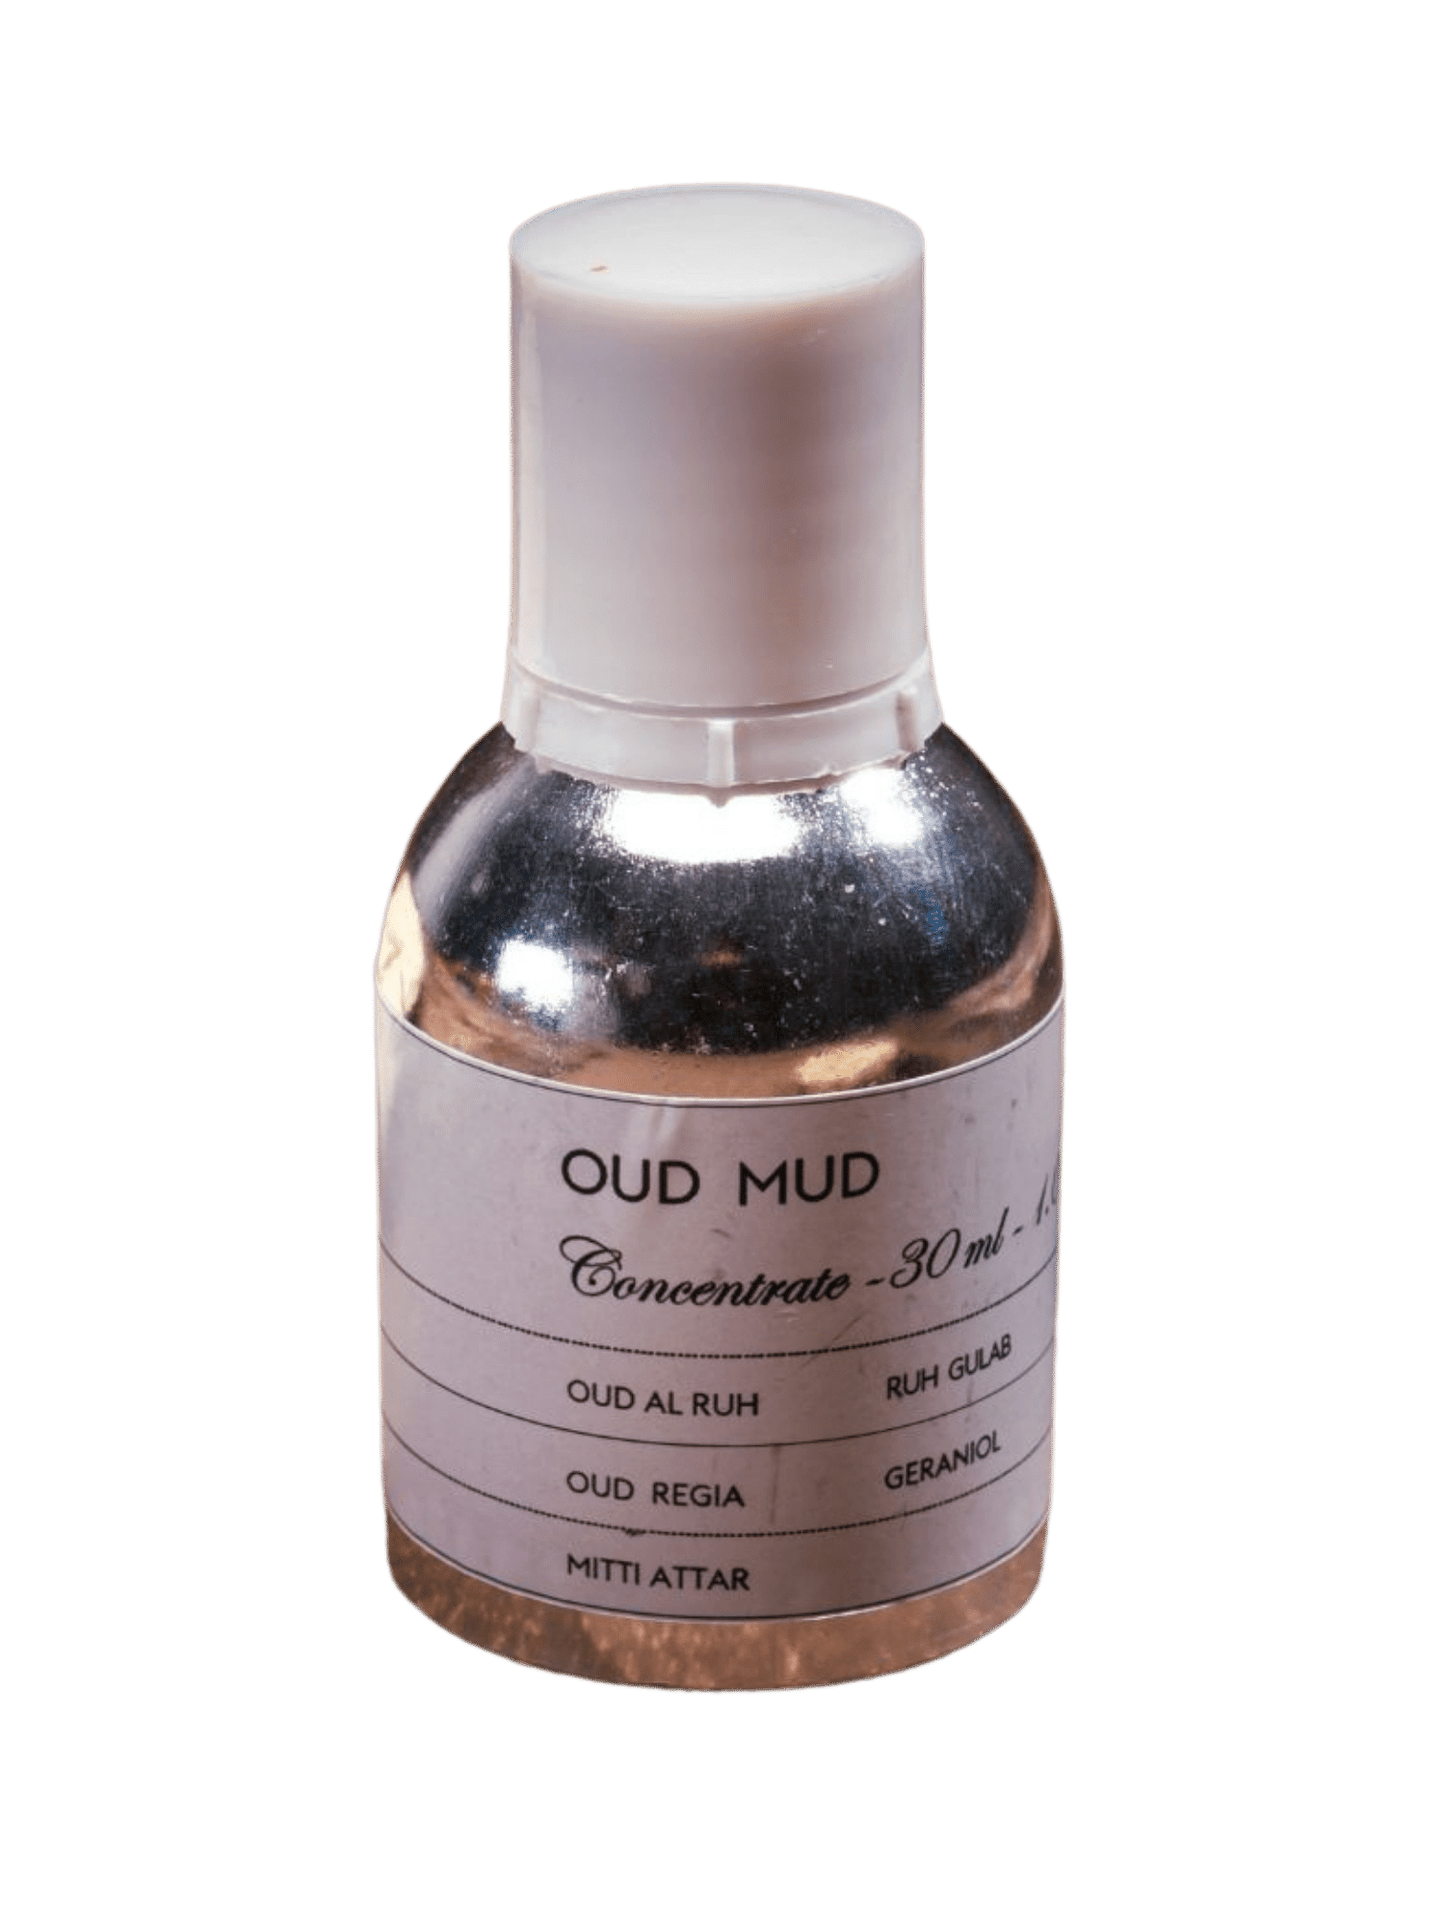 Mud Infused in Oud Diffuser Oil